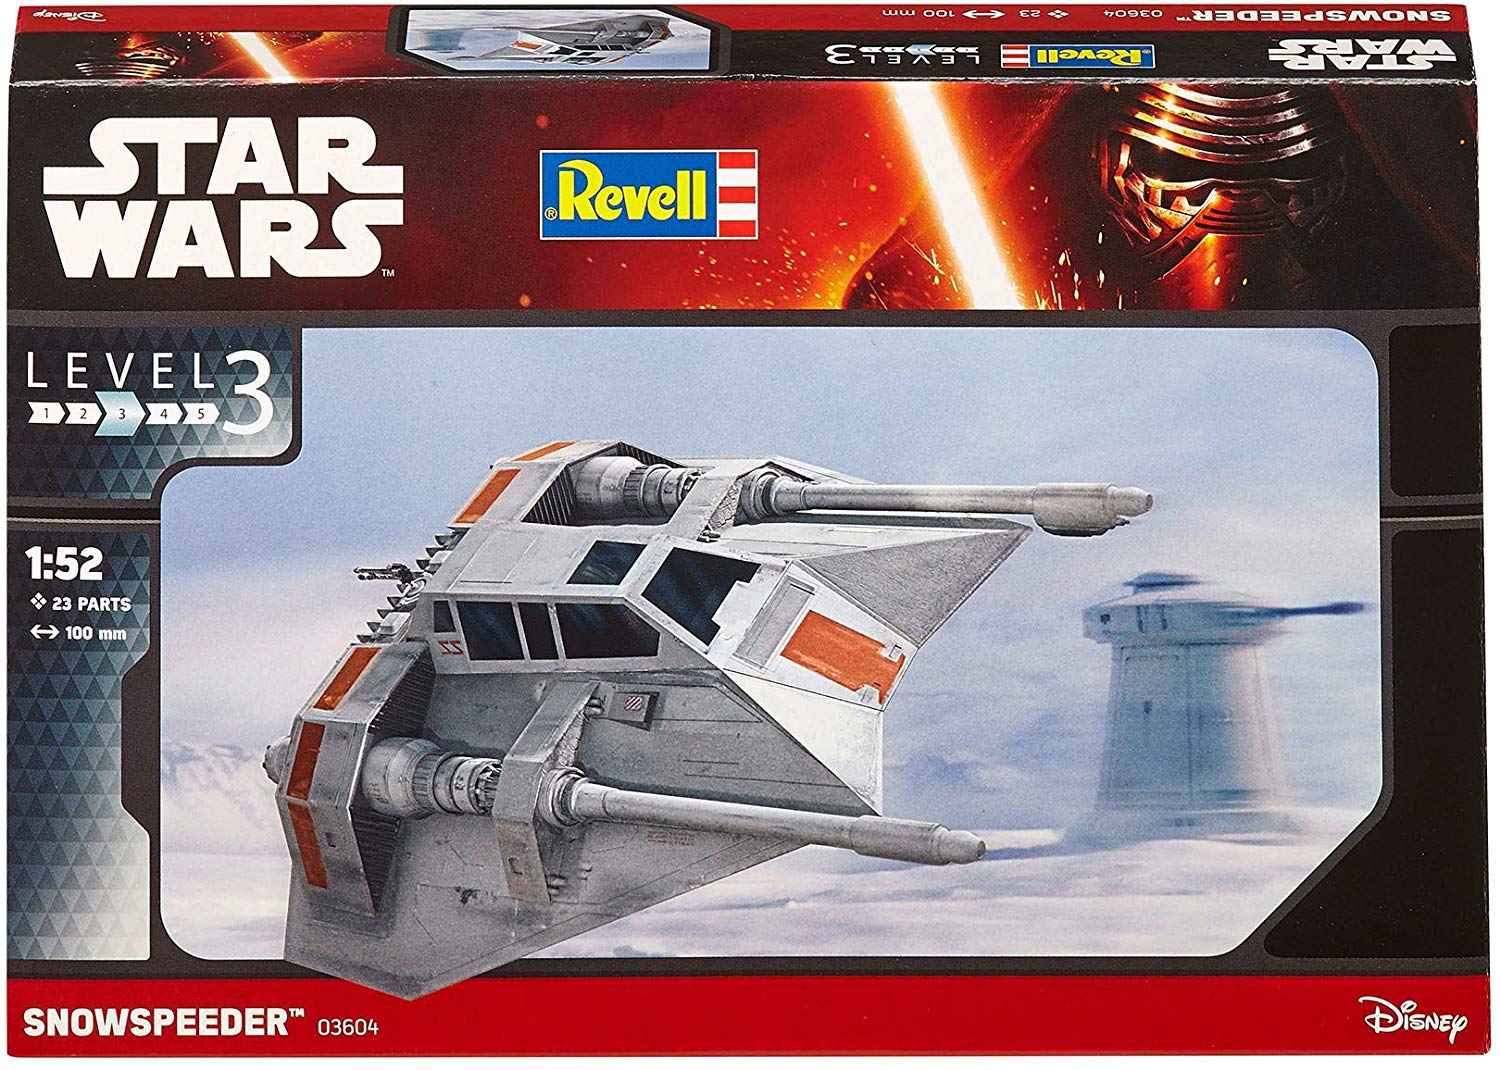 Revell Model Kit Star Wars Episode VII Snowspeeder Scale 1:52